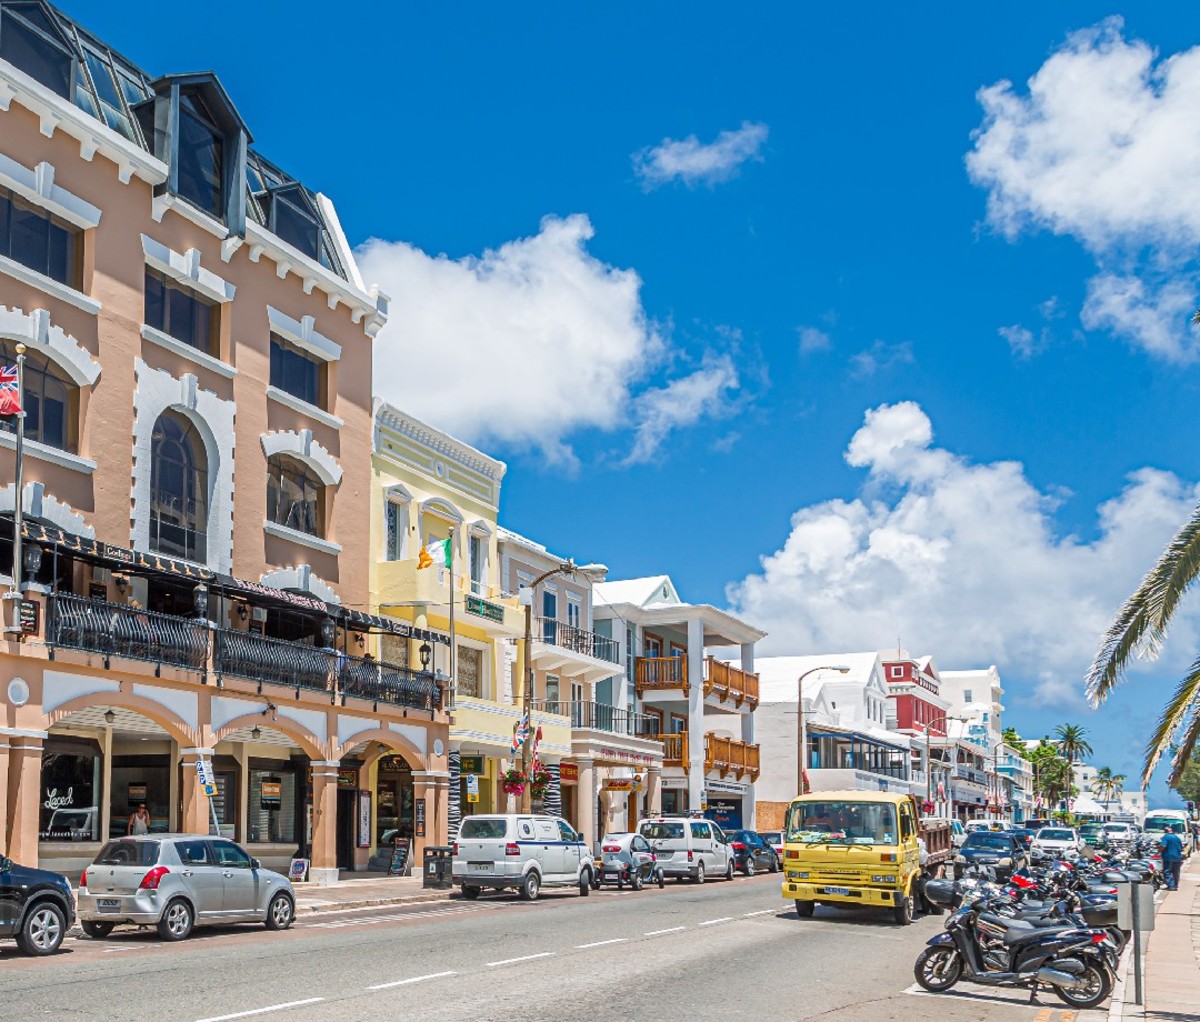 Street scene in downtown Hamilton, Bermuda